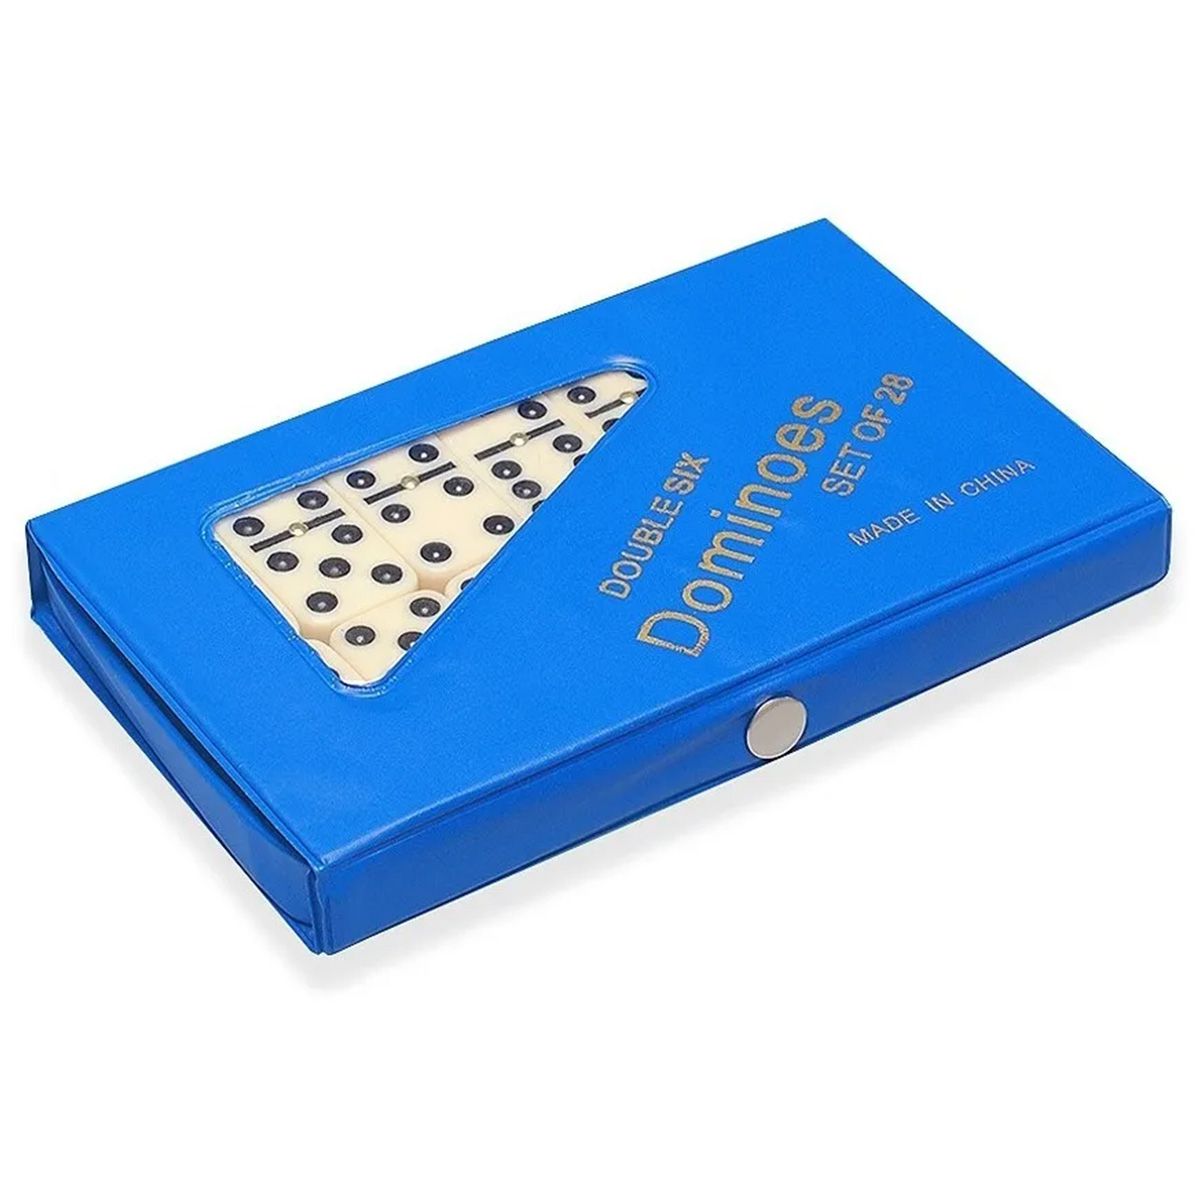 Jogo domino doble six profissional